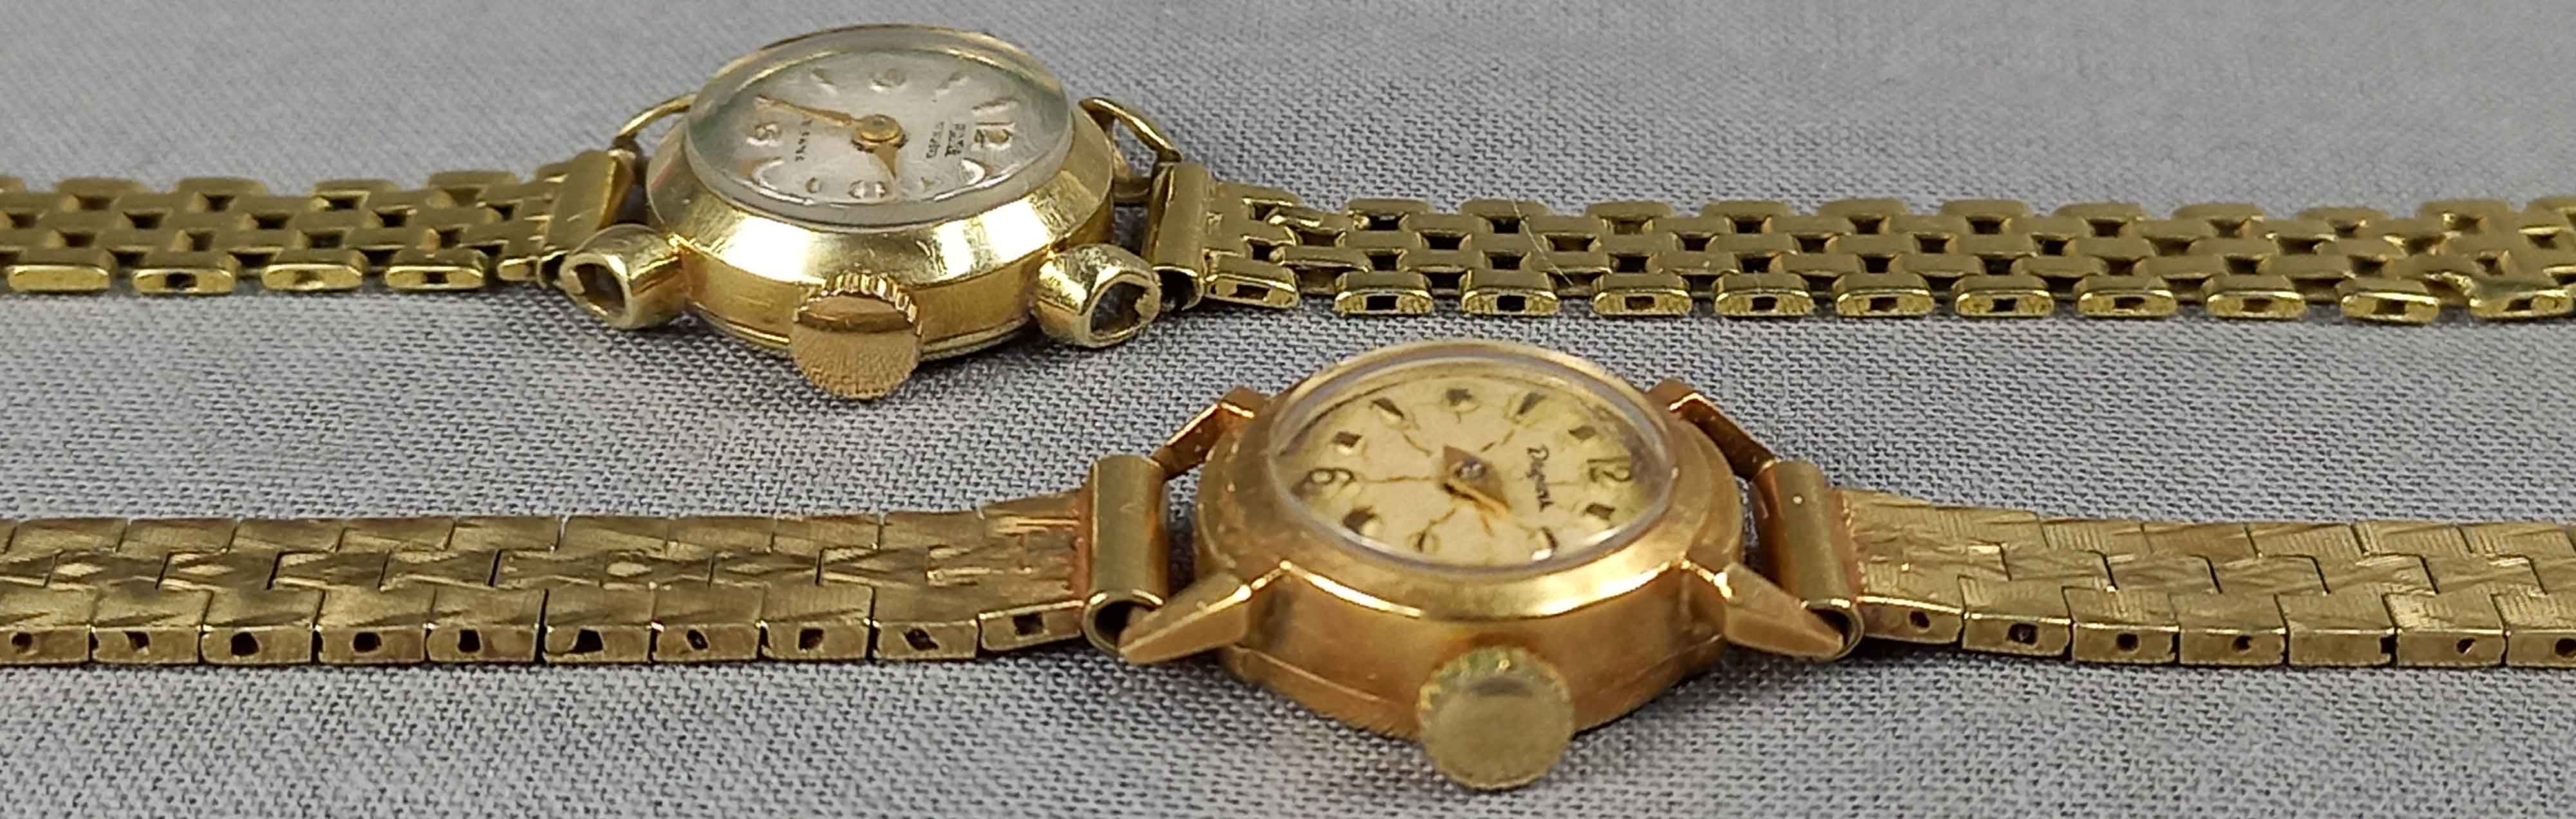 Gelb - Gold 585. 2 Damen Armbanduhren. - Image 5 of 11